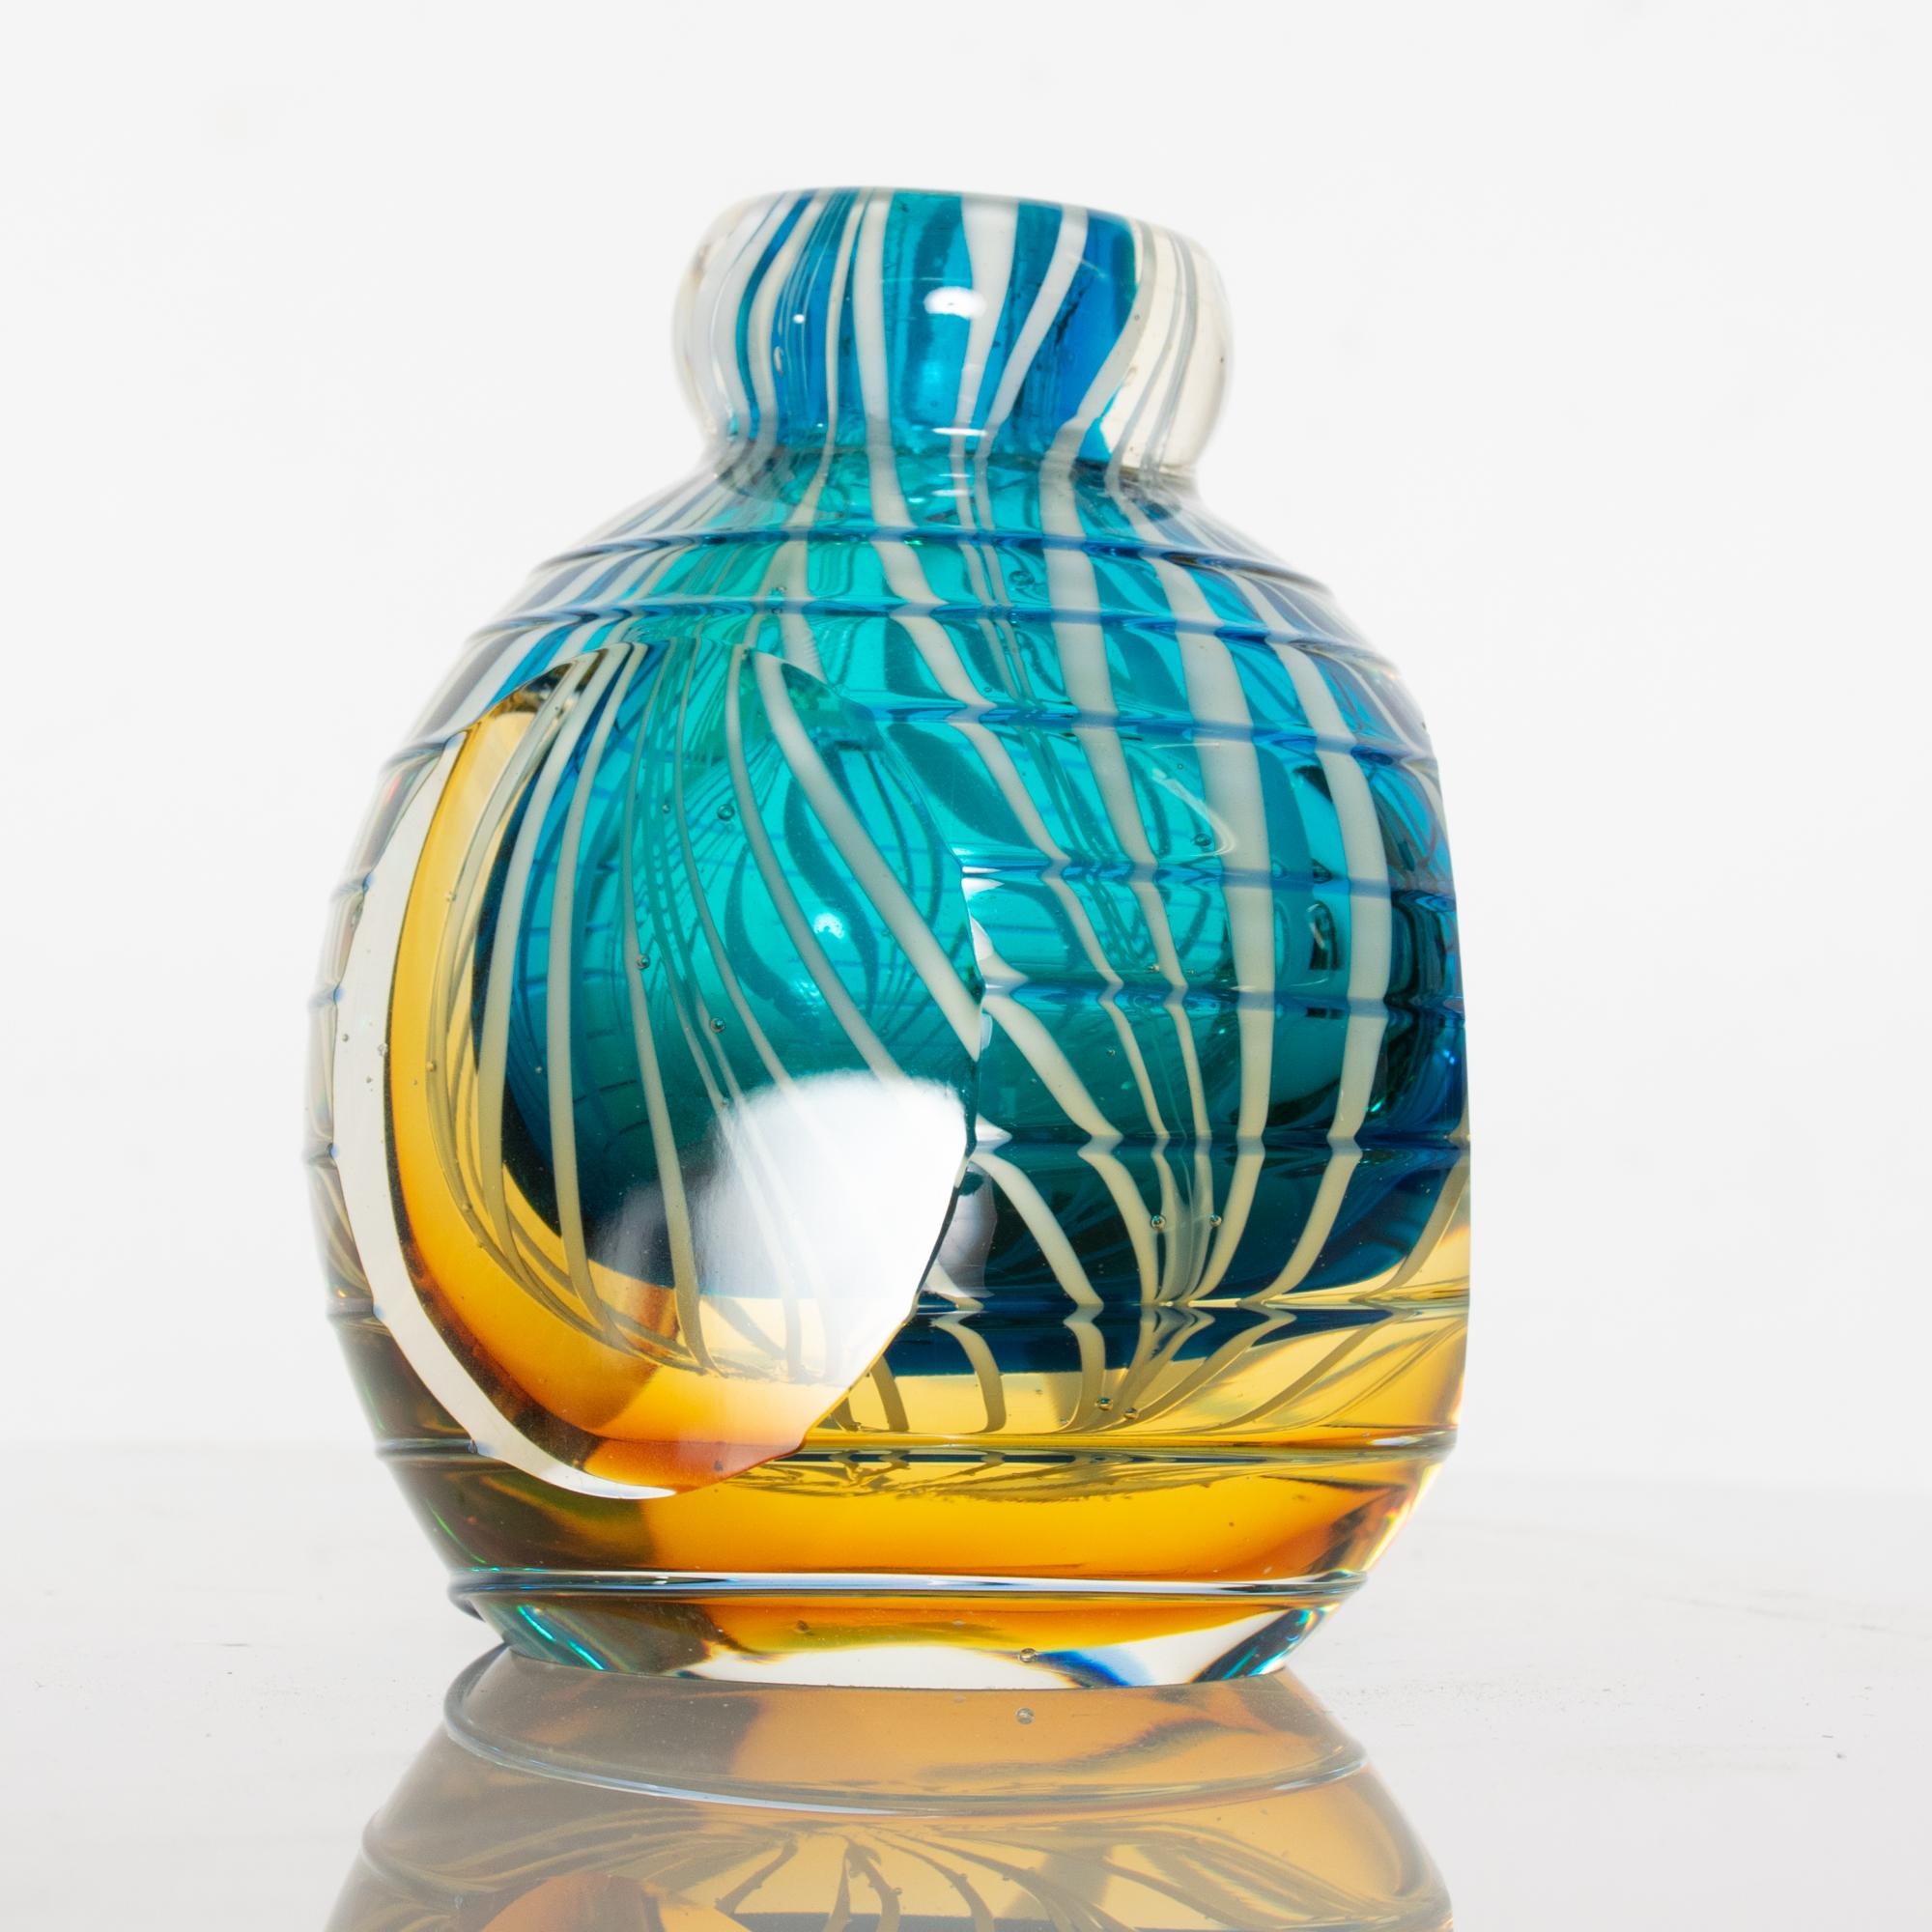 Late 20th Century Vivid Blue Gold & White Swirled Venetian Vase Vintage Murano Glass Italy 1970s